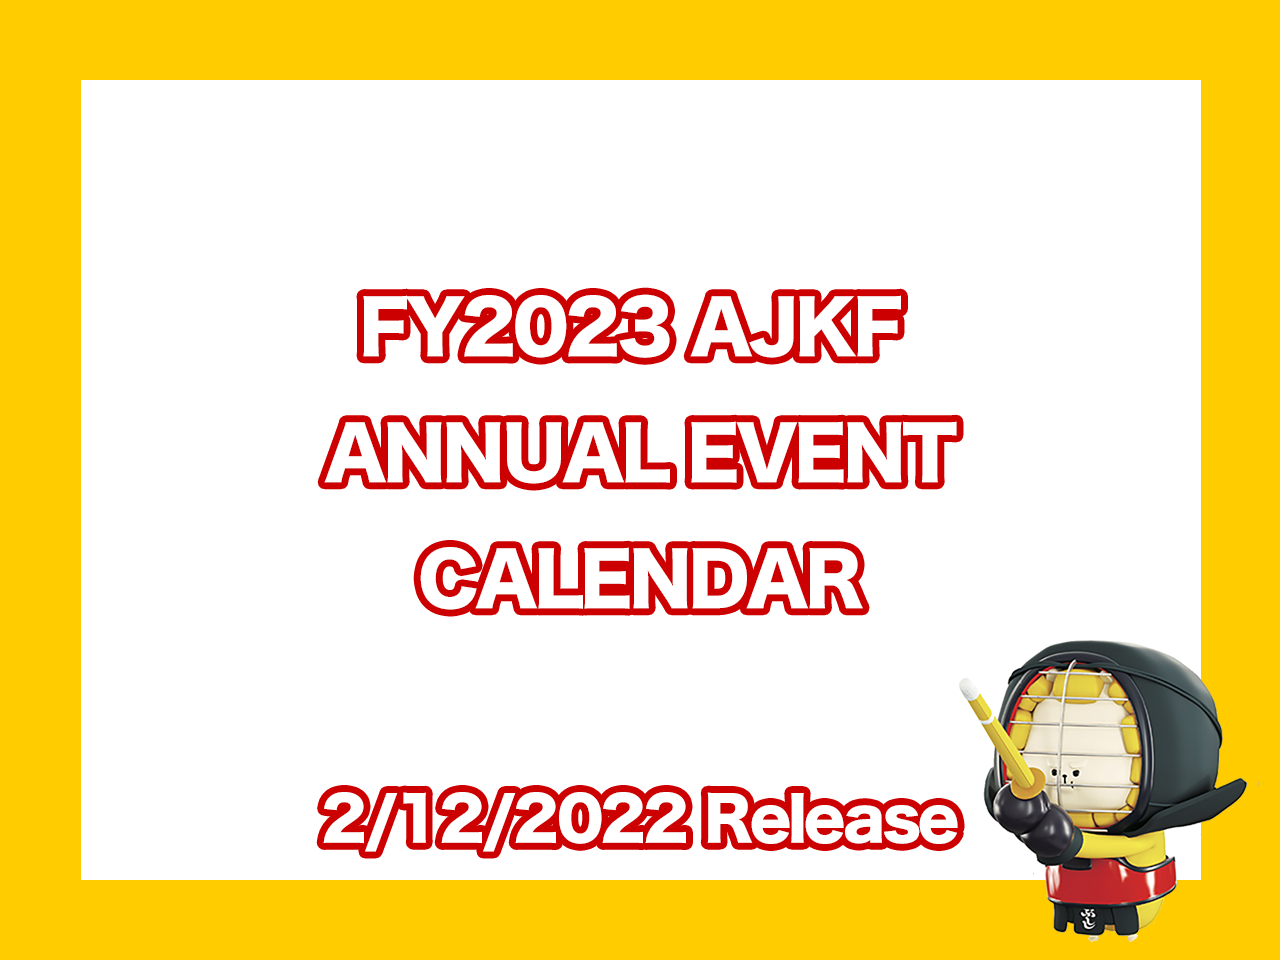 FY2023 AJKF ANNUAL EVENT CALENDAR 全剣連のお知らせ 全日本剣道連盟 AJKF